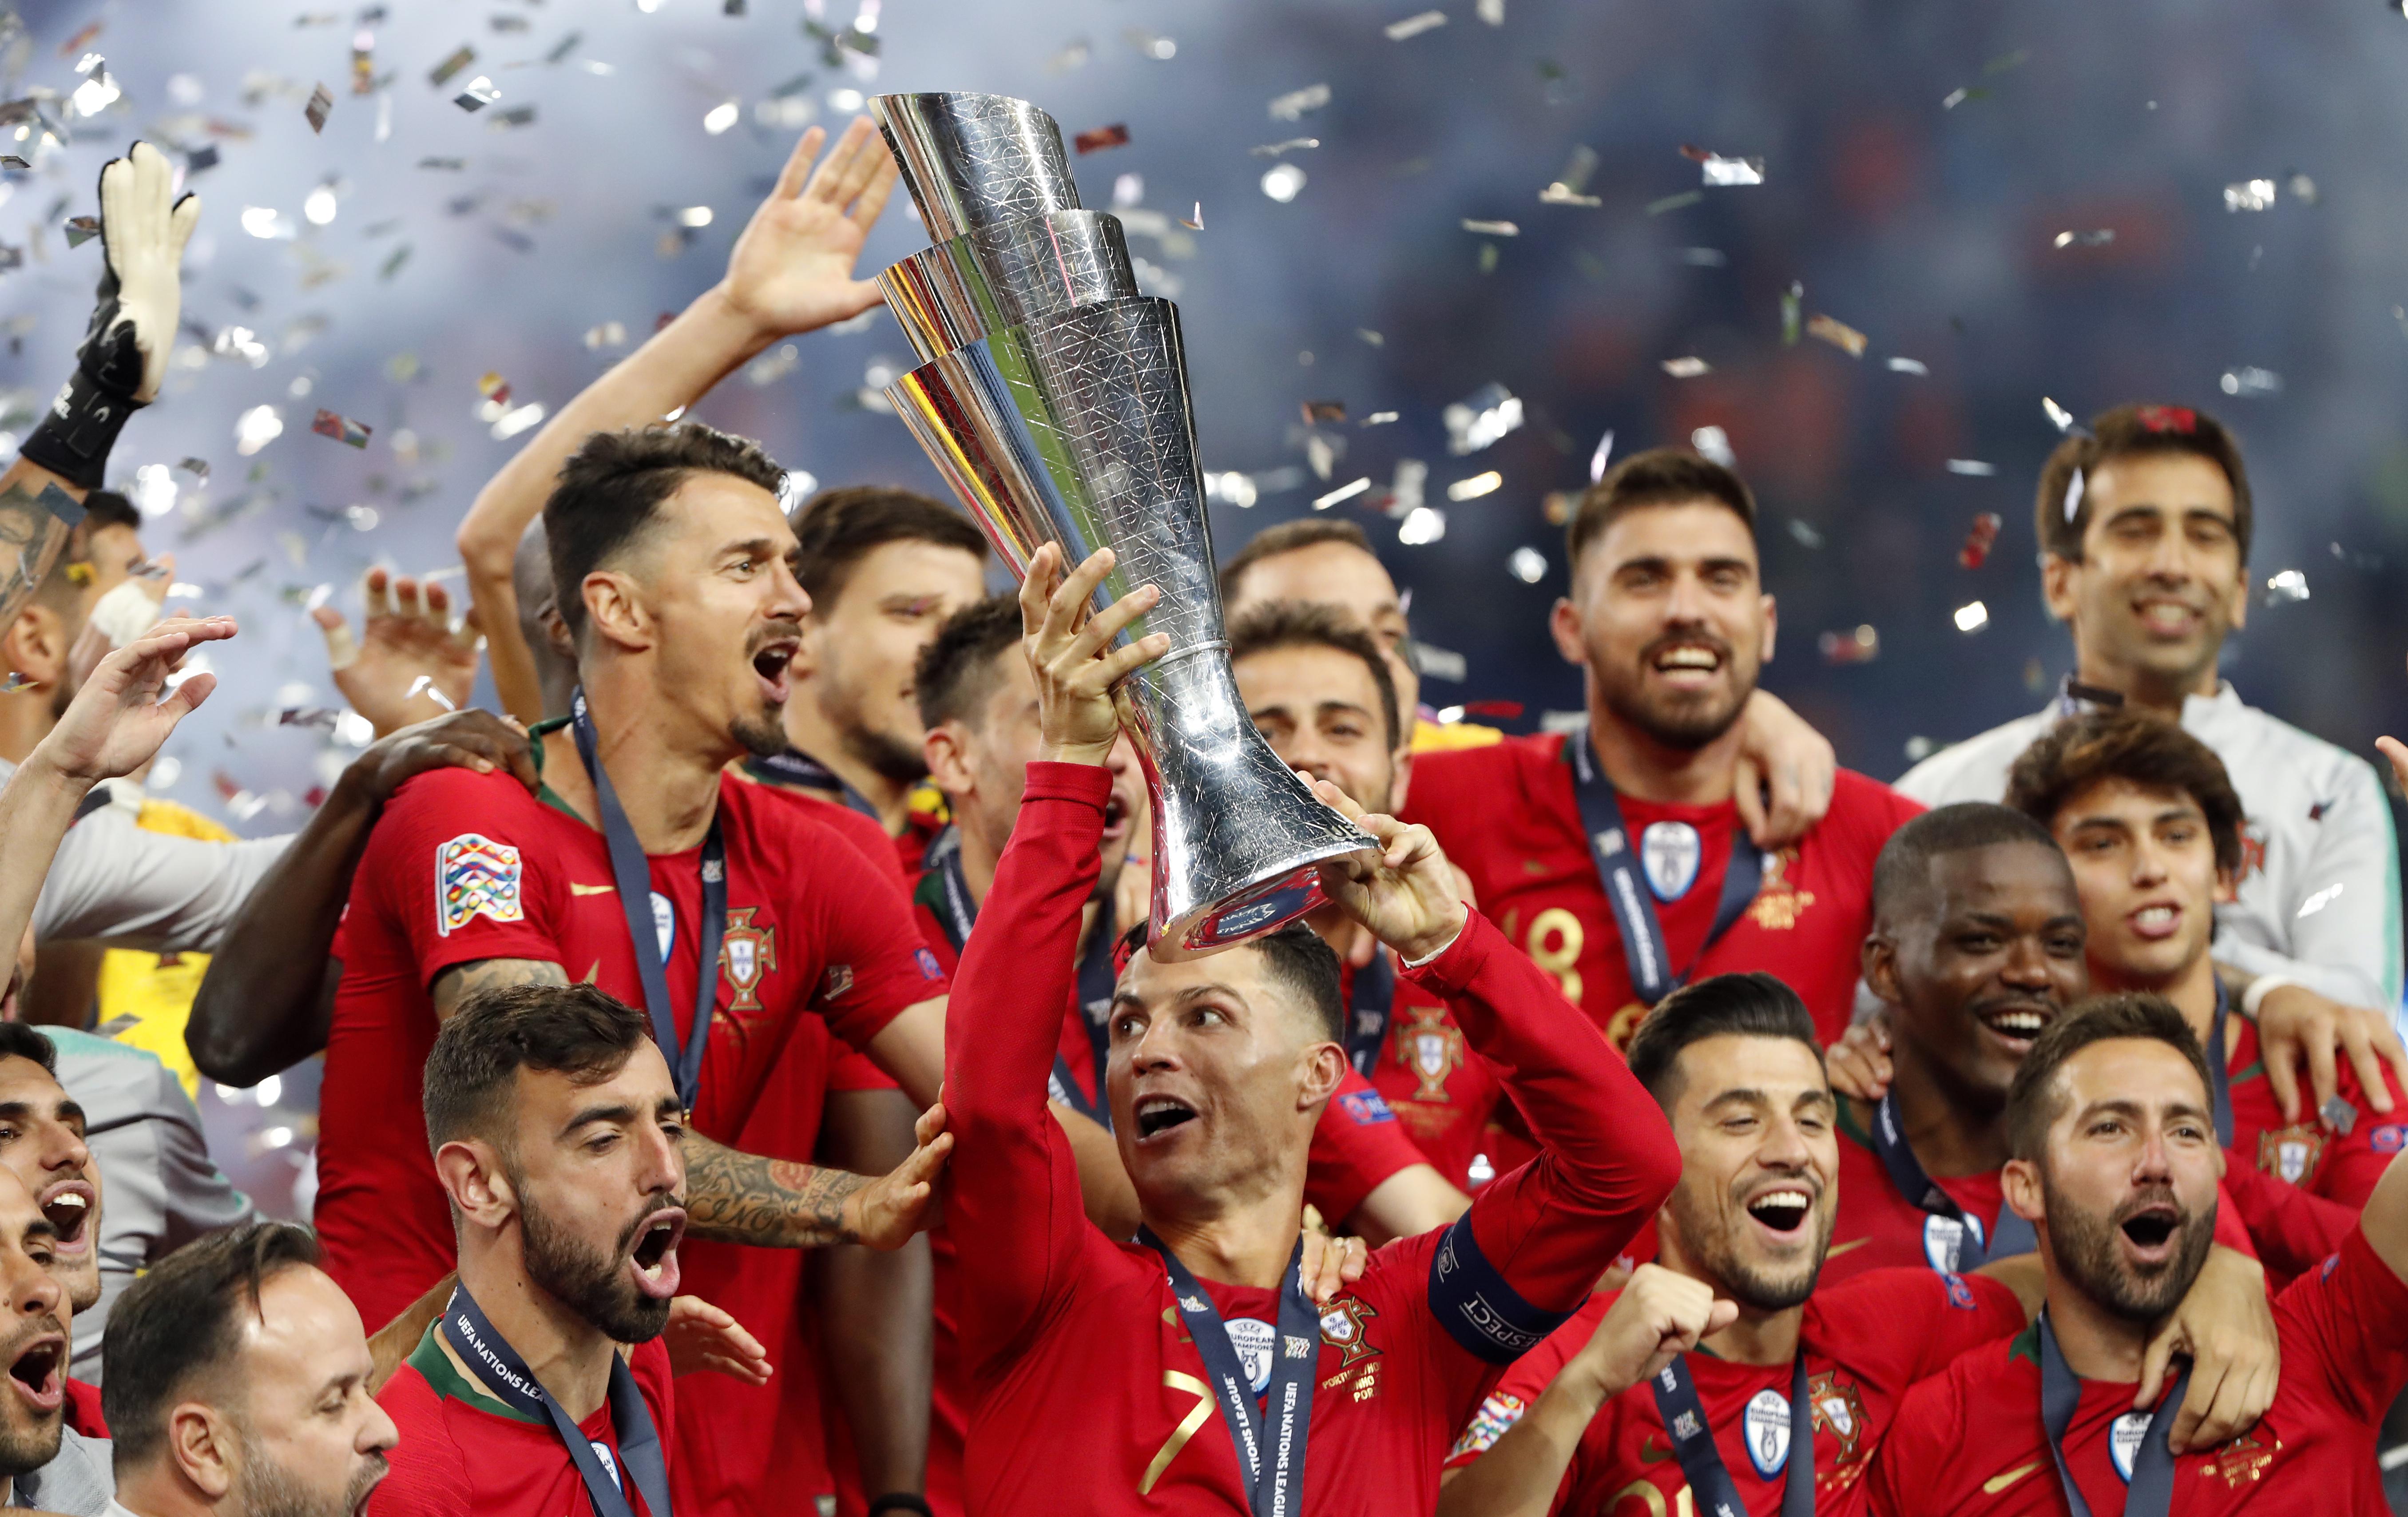 UEFA Nations League winner Portugal rises in FIFA rankings The